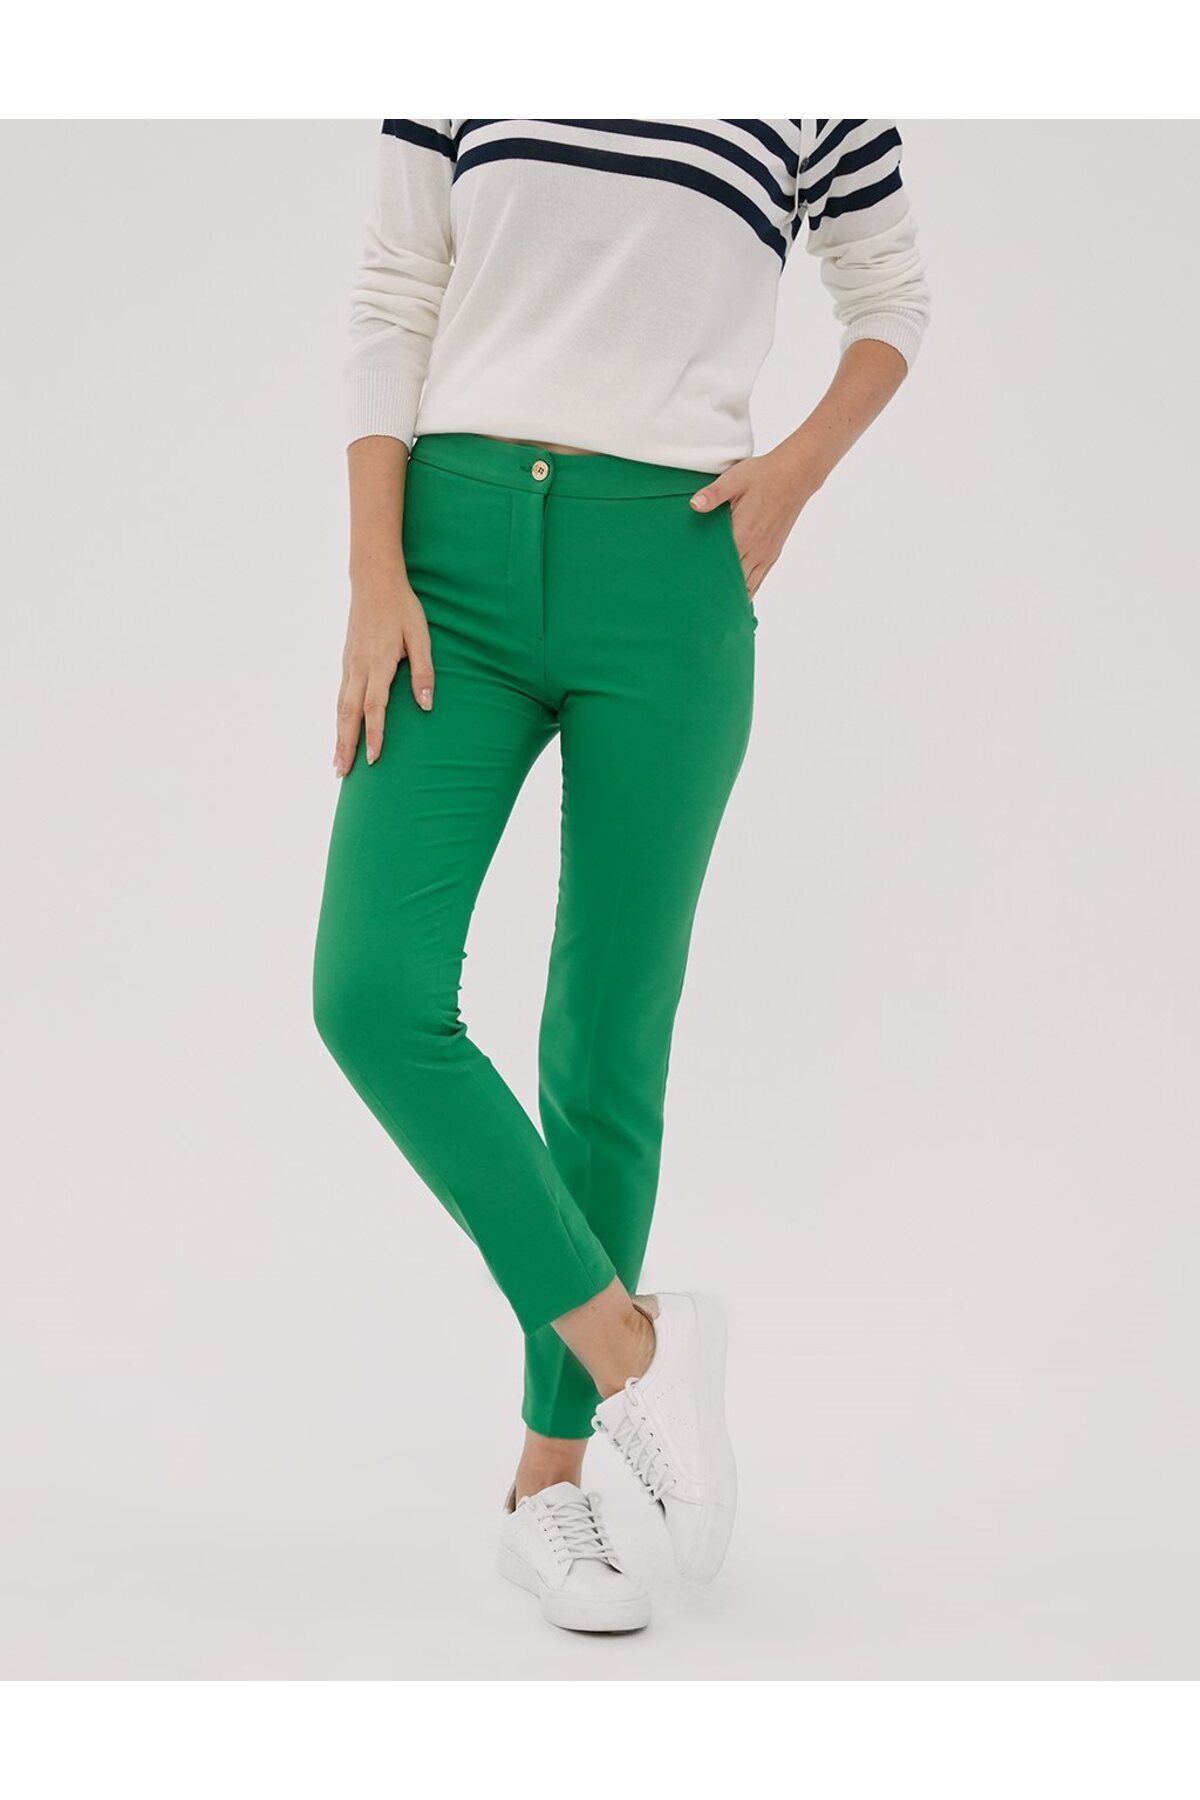 Kayra Basic Fermuarlı Pantolon Yeşil Sz 19501